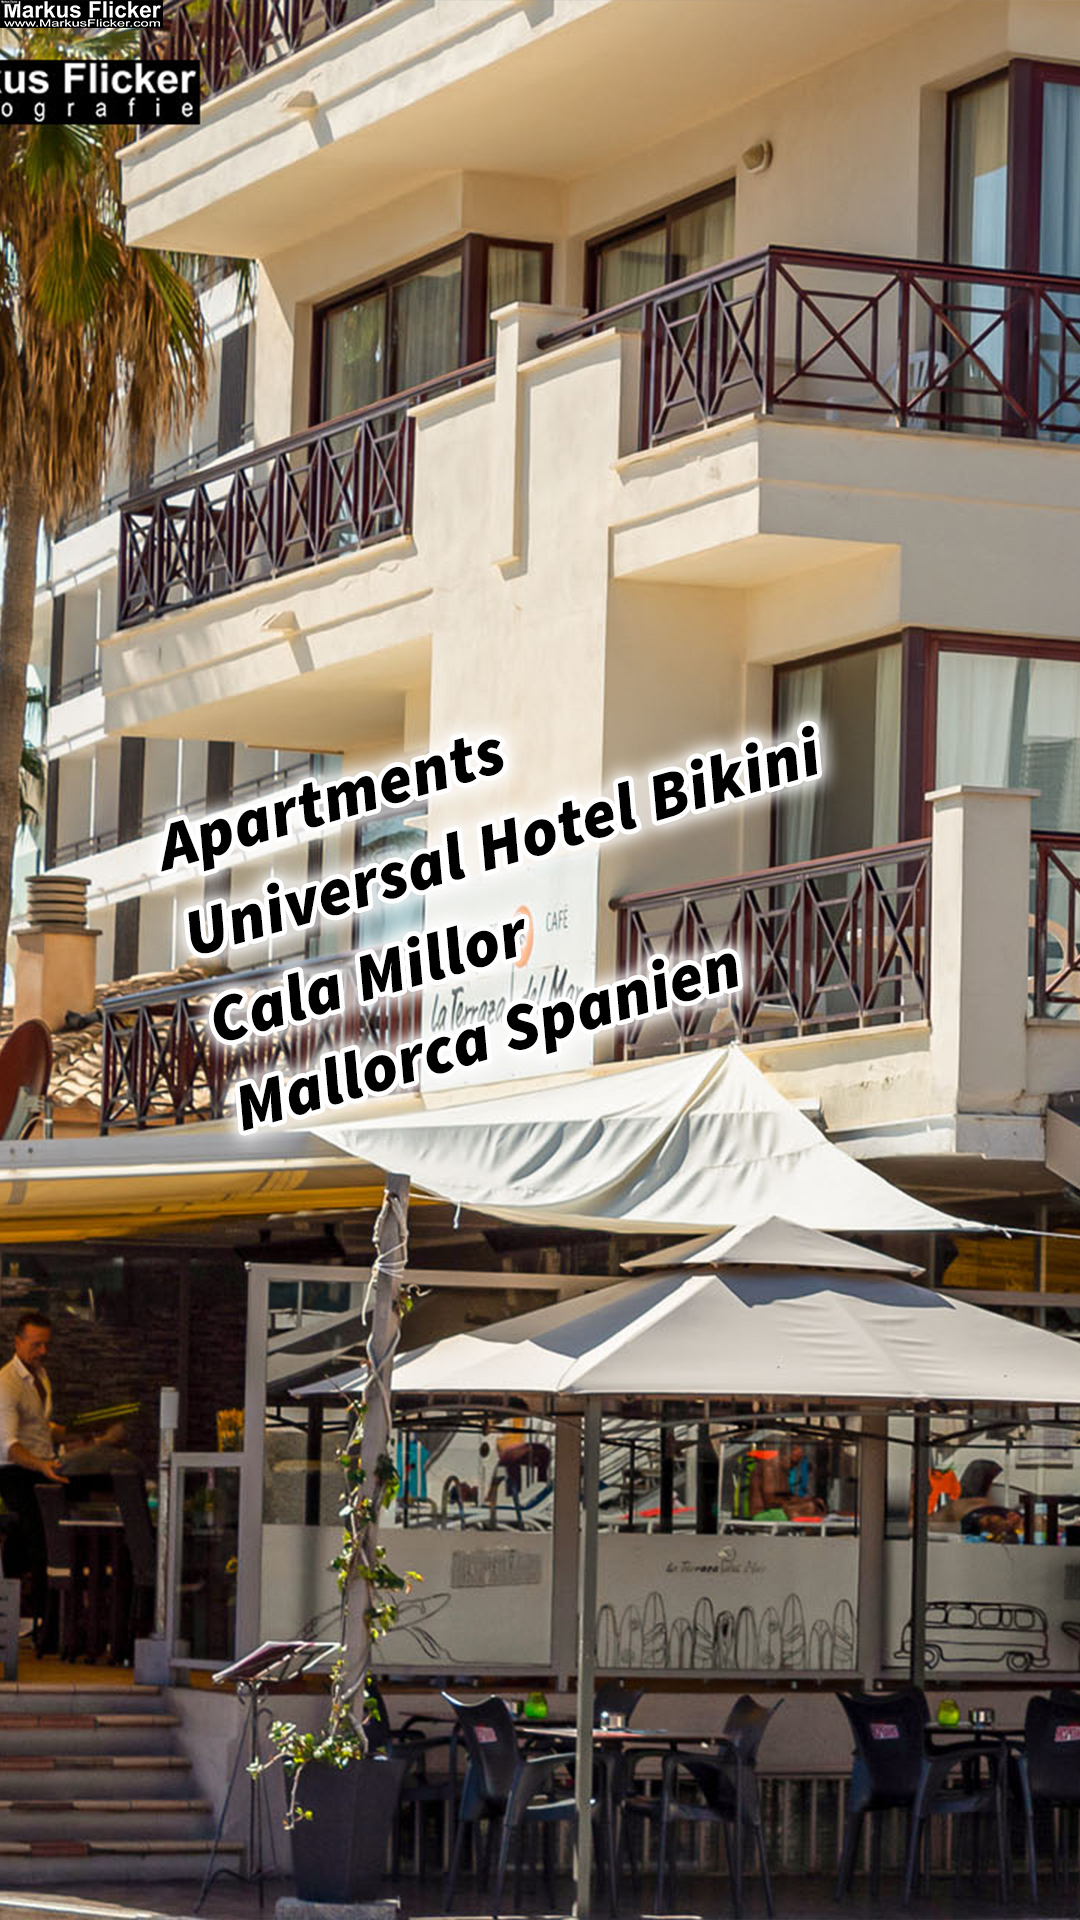 Apartments Universal Hotel Bikini Cala Millor Mallorca Spanien